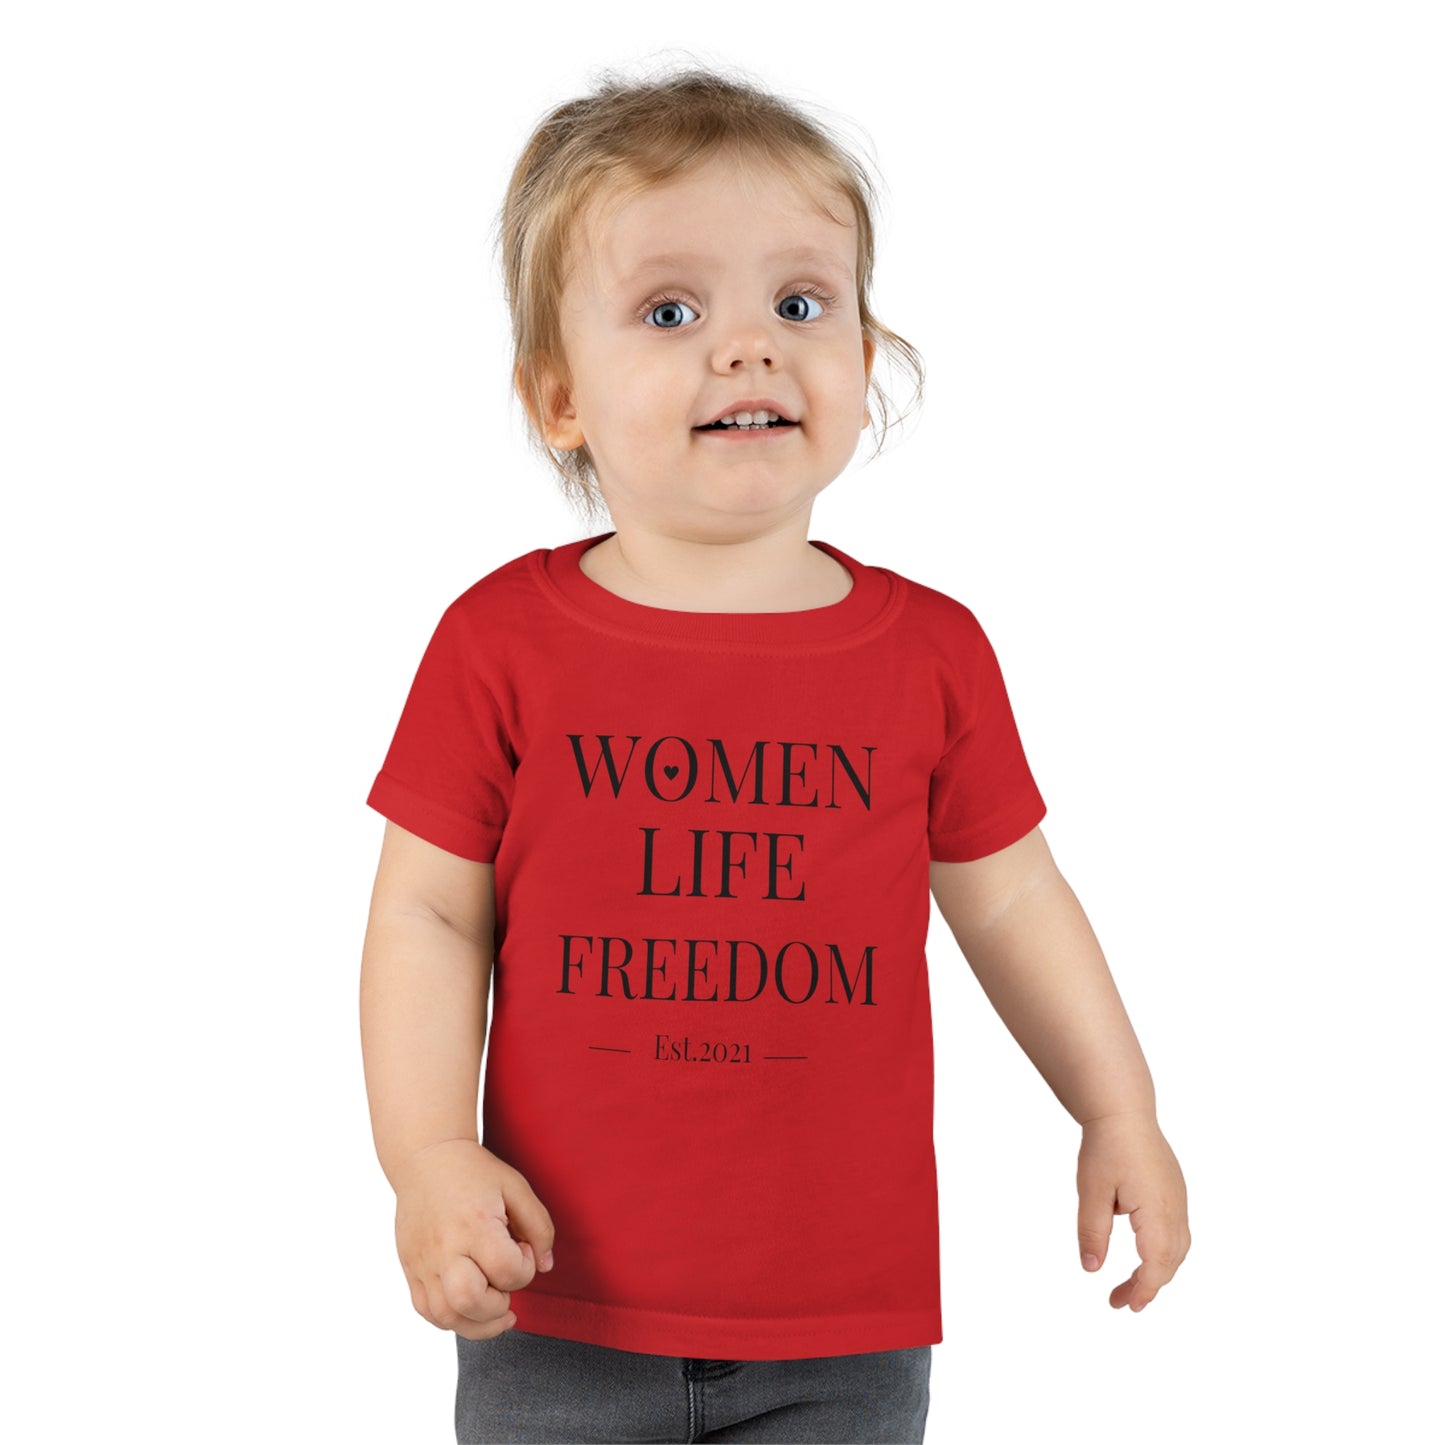 Women Life Freedom - Toddler T-shirt